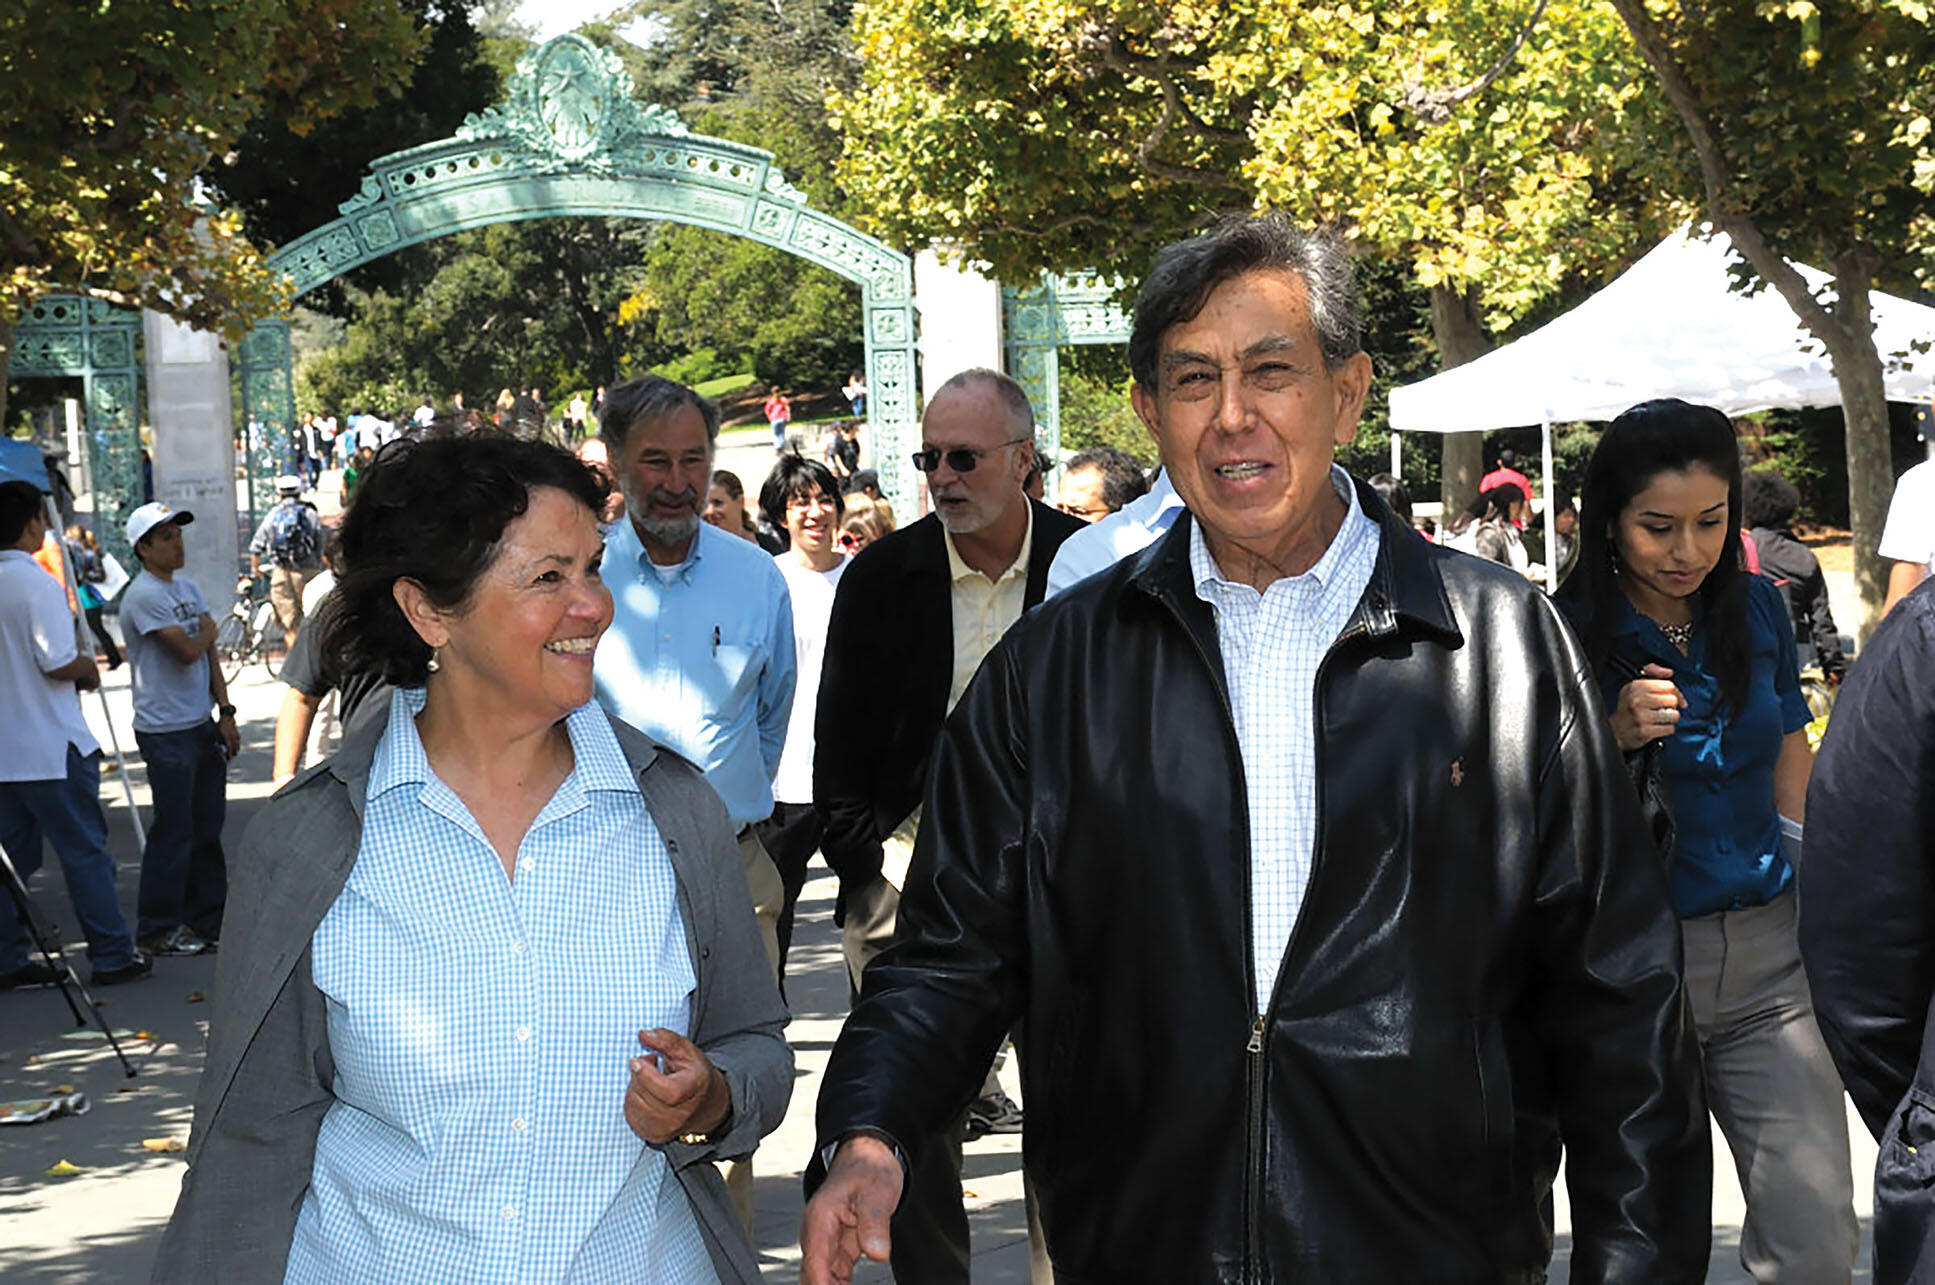 Beatriz Manz and Cuauhtémoc Cárdenas, followed by Steve Silberstein and David Bonior, walk on UC Berkeley’s campus.